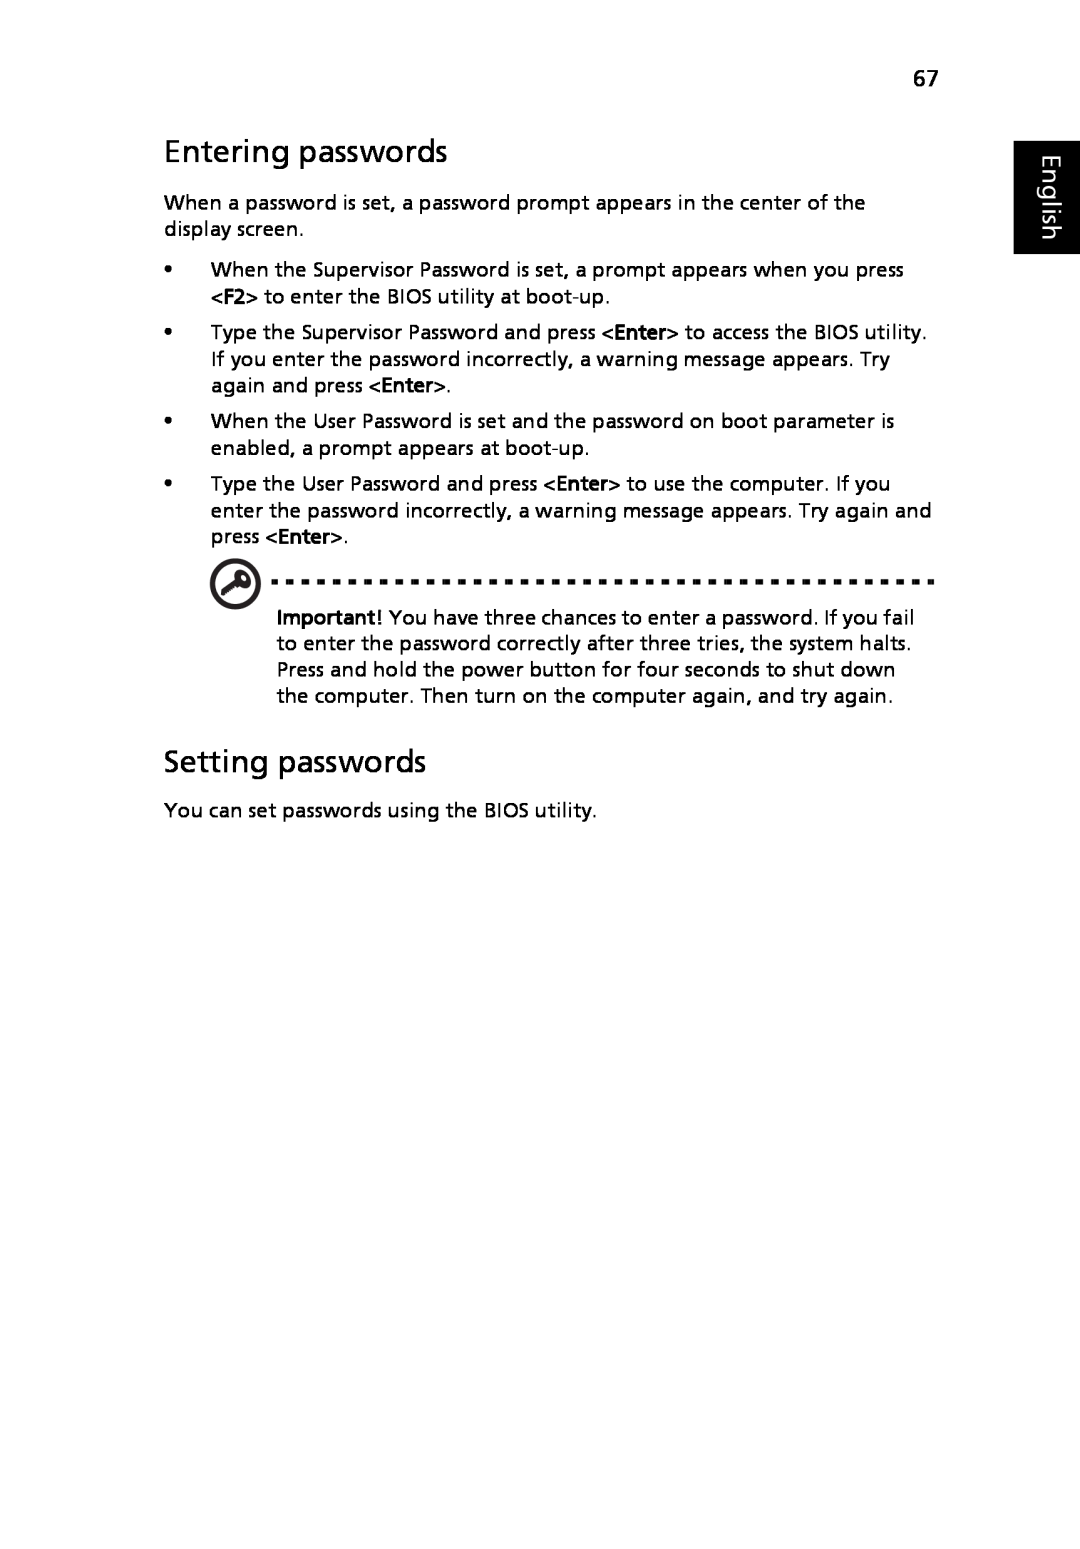 Acer 5010 Series, 5410 Series manual Entering passwords, Setting passwords, English 